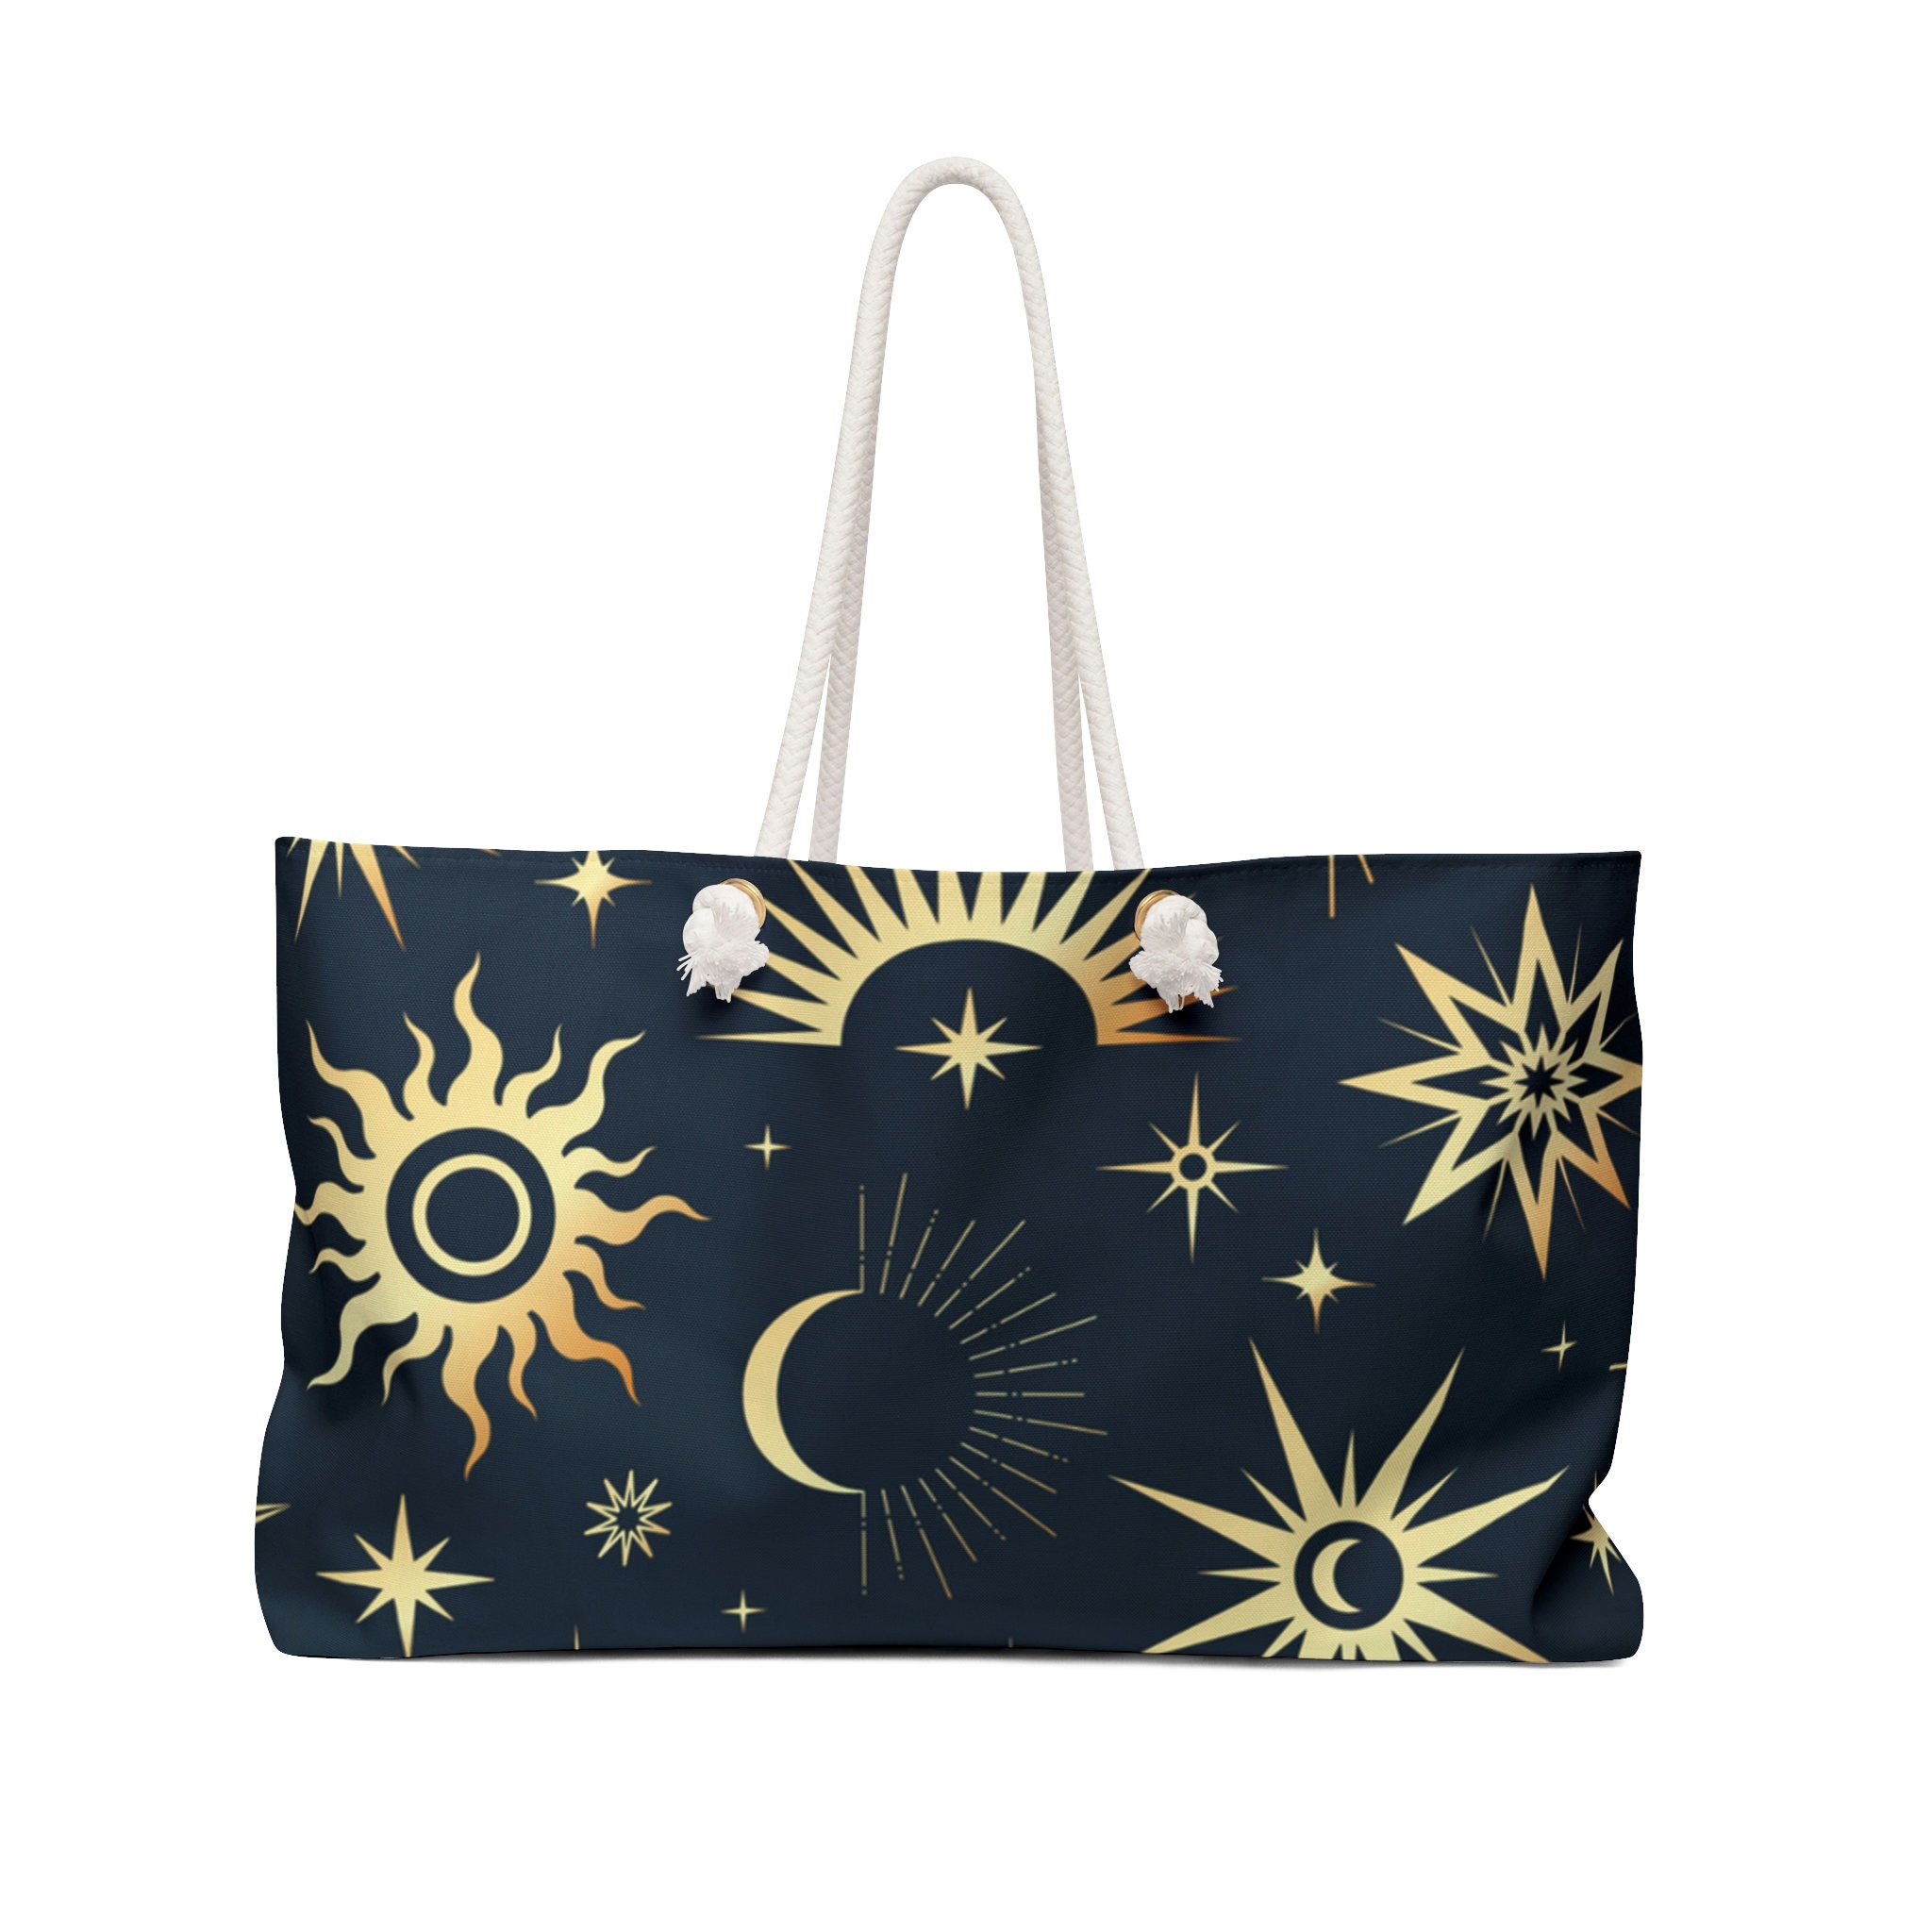 Weekender Bag Celestial Sun Themed, Large Tote Bag 24 X 13, Gift for Friend  Mom, Beach Bag, Overnight Travel Bag, Book or School Bag 